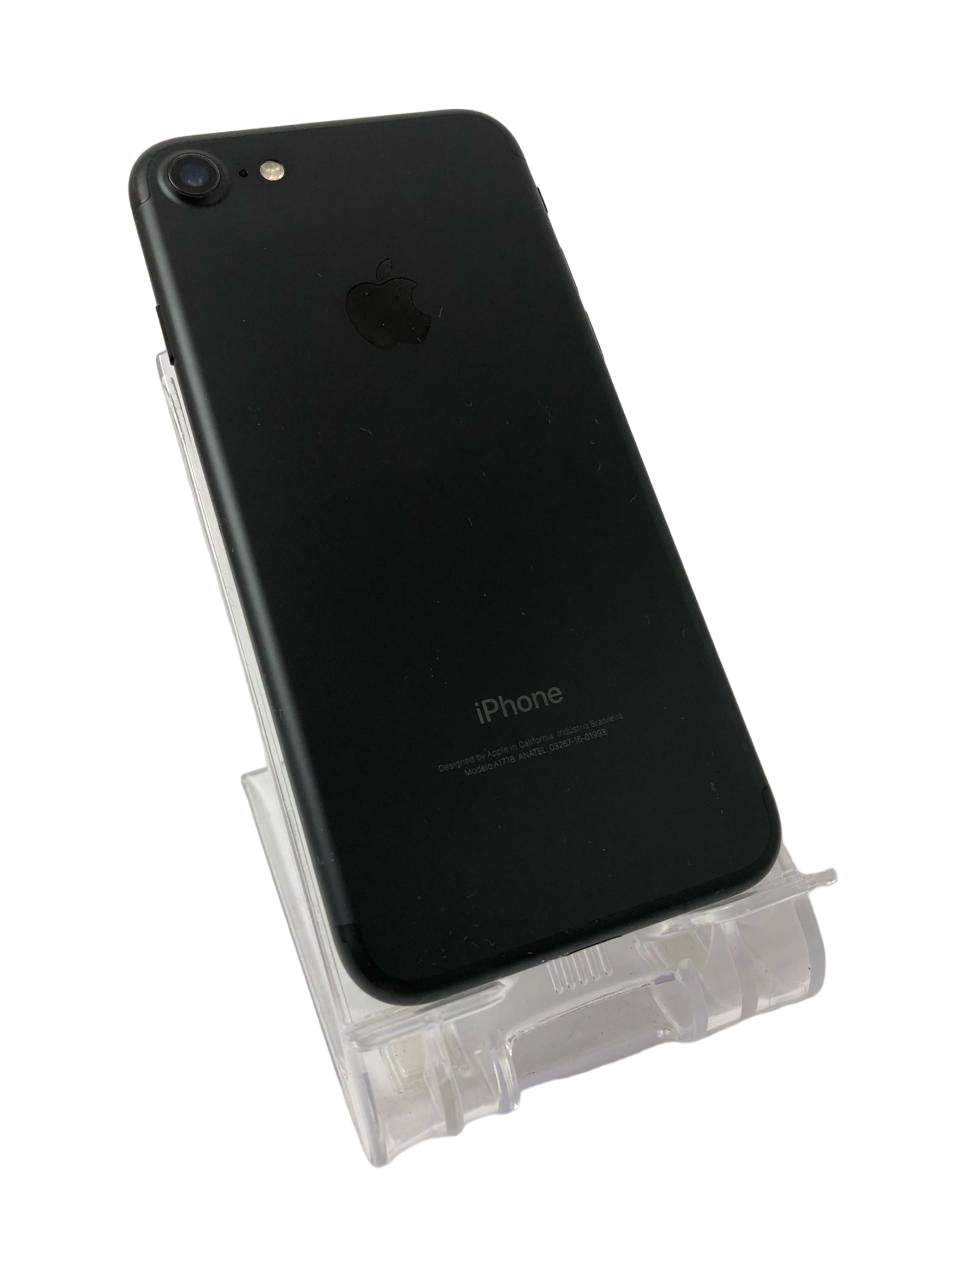 iPhone 7, MN922BR/A, 128GB, tela 4.7